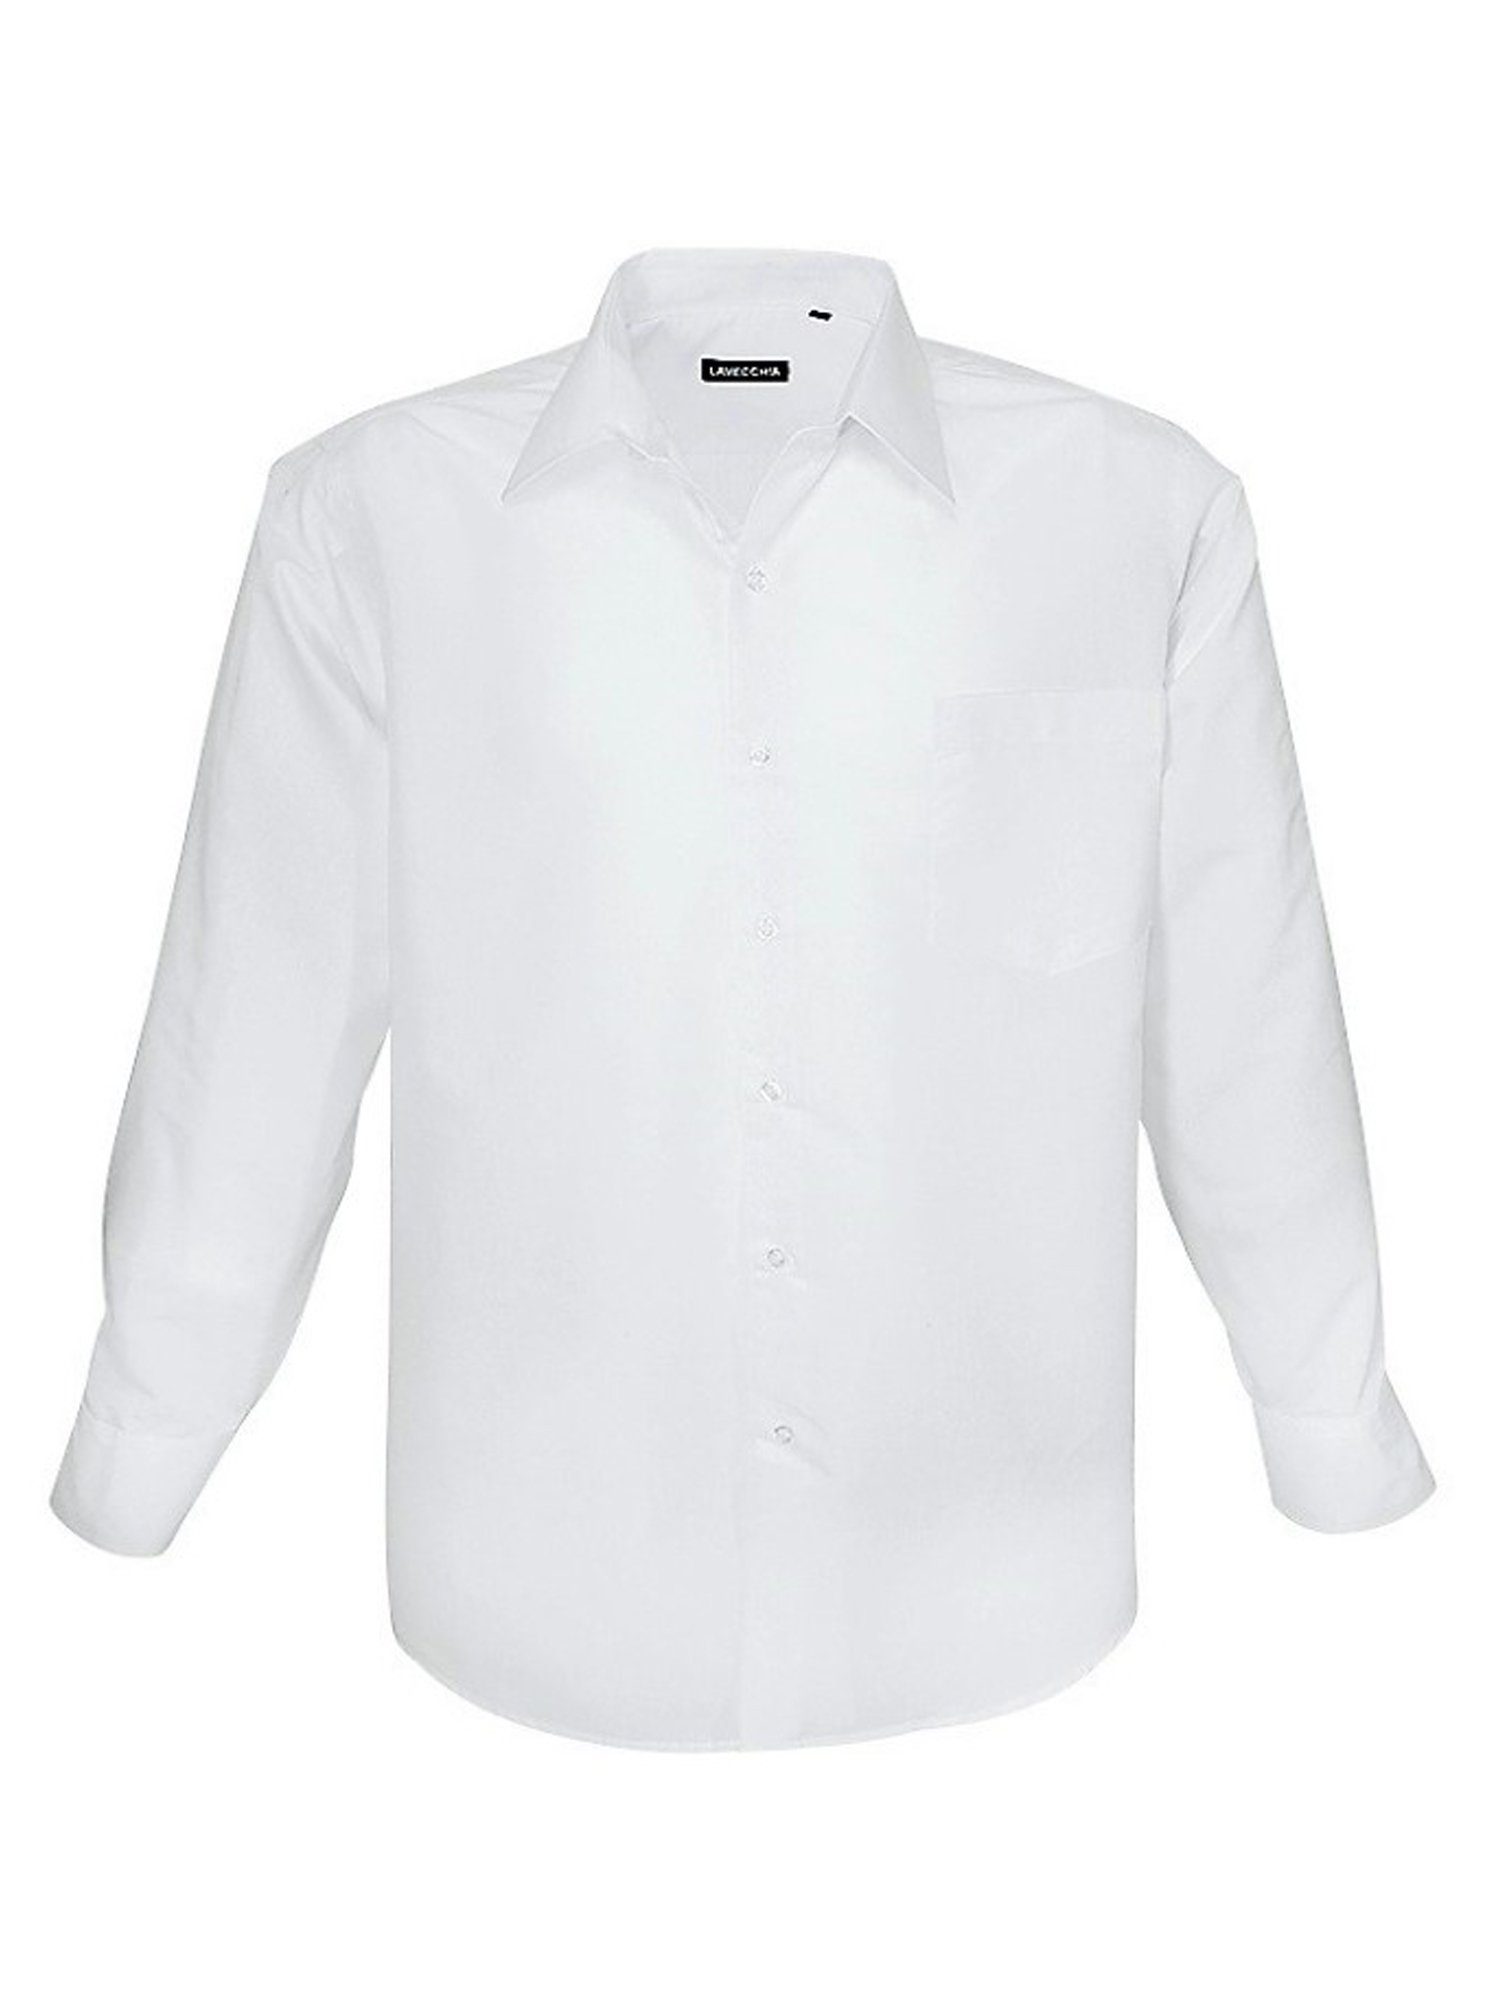 Lavecchia Langarmhemd Übergrößen Herren Hemd HLA-1314 Basic Herrenhemd weiß